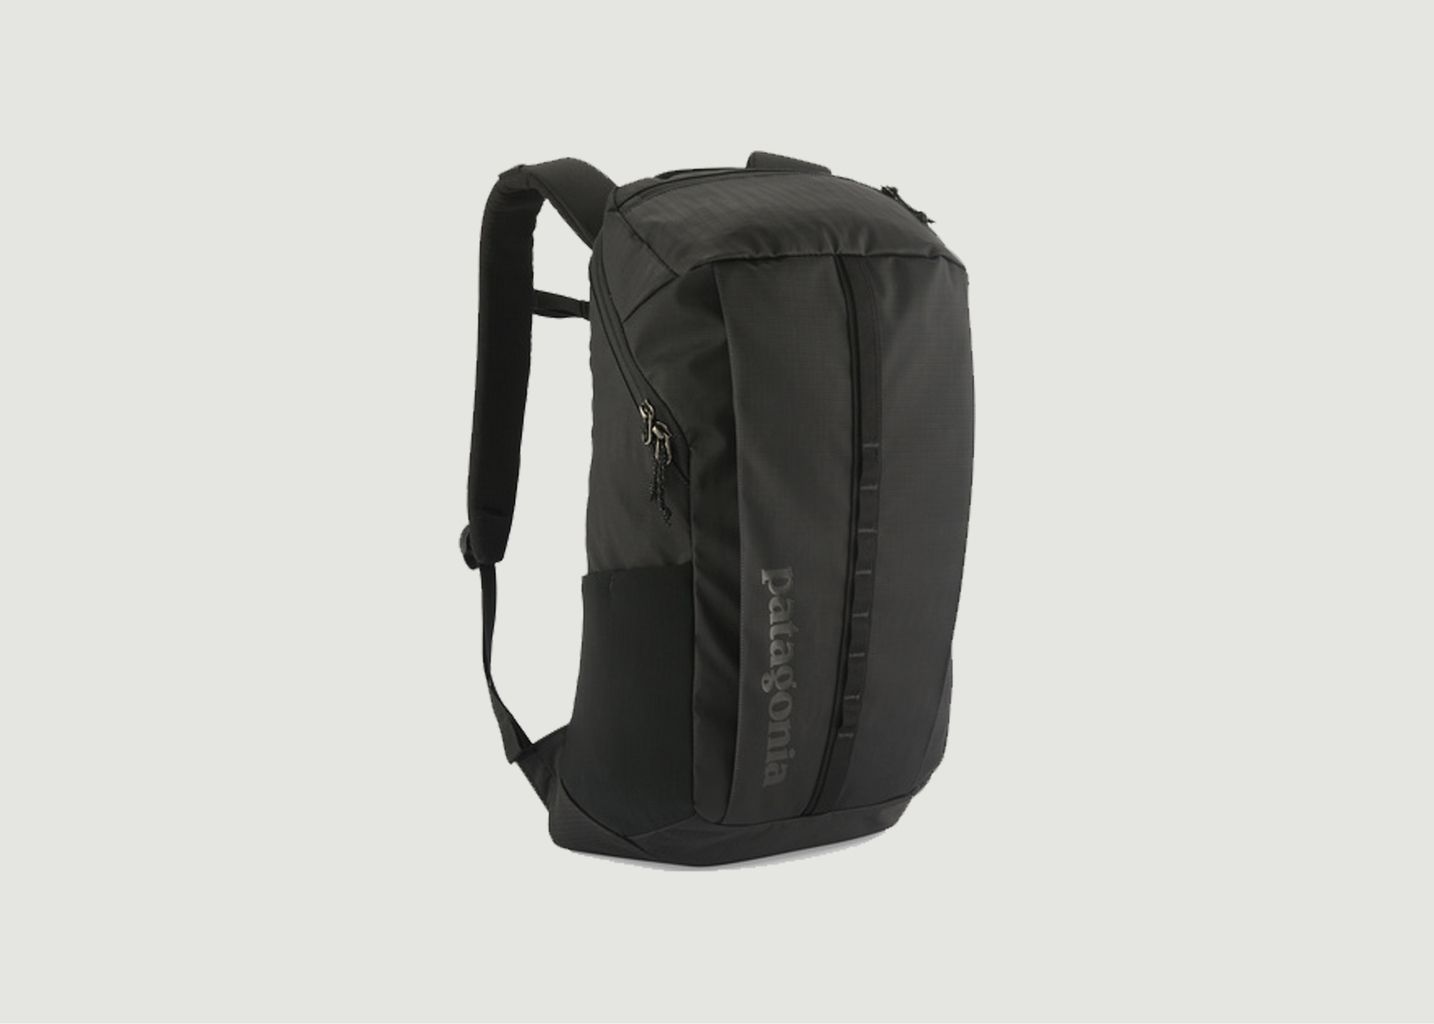 Black Hole Pack 25L backpack - Patagonia